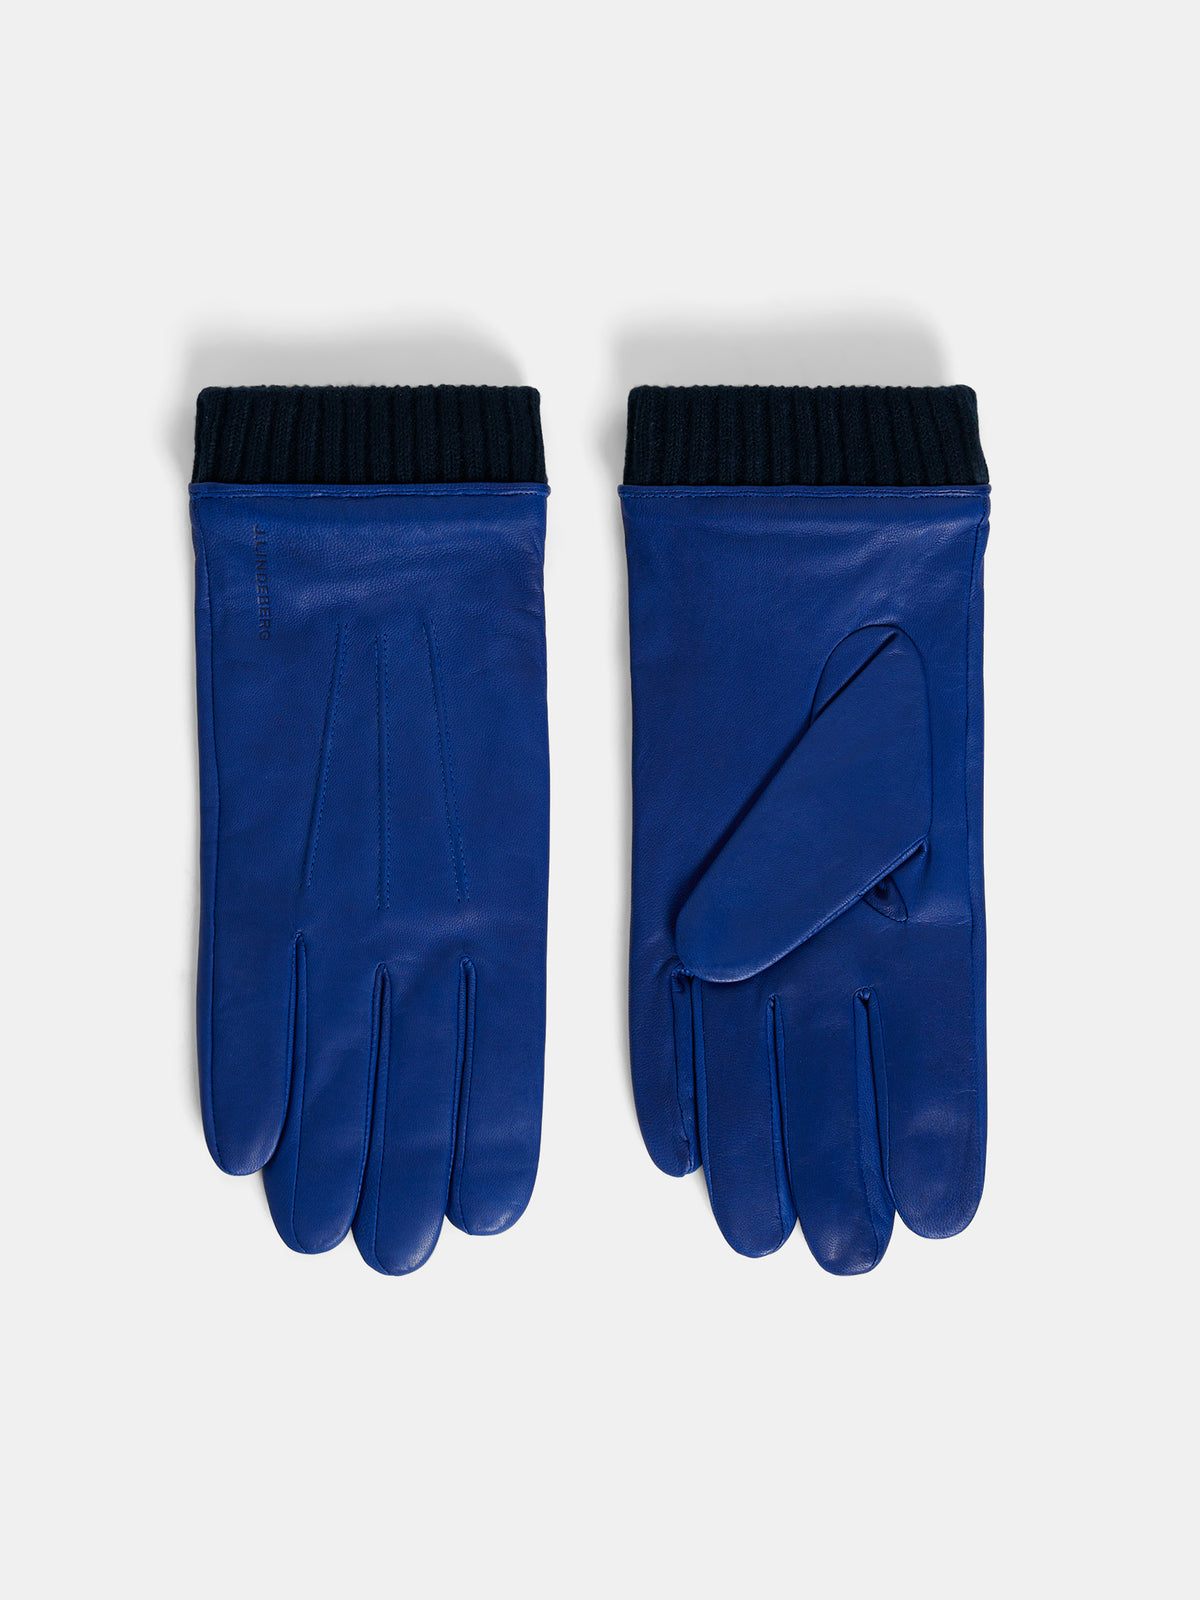 Myles Leather Glove / Surf the Web